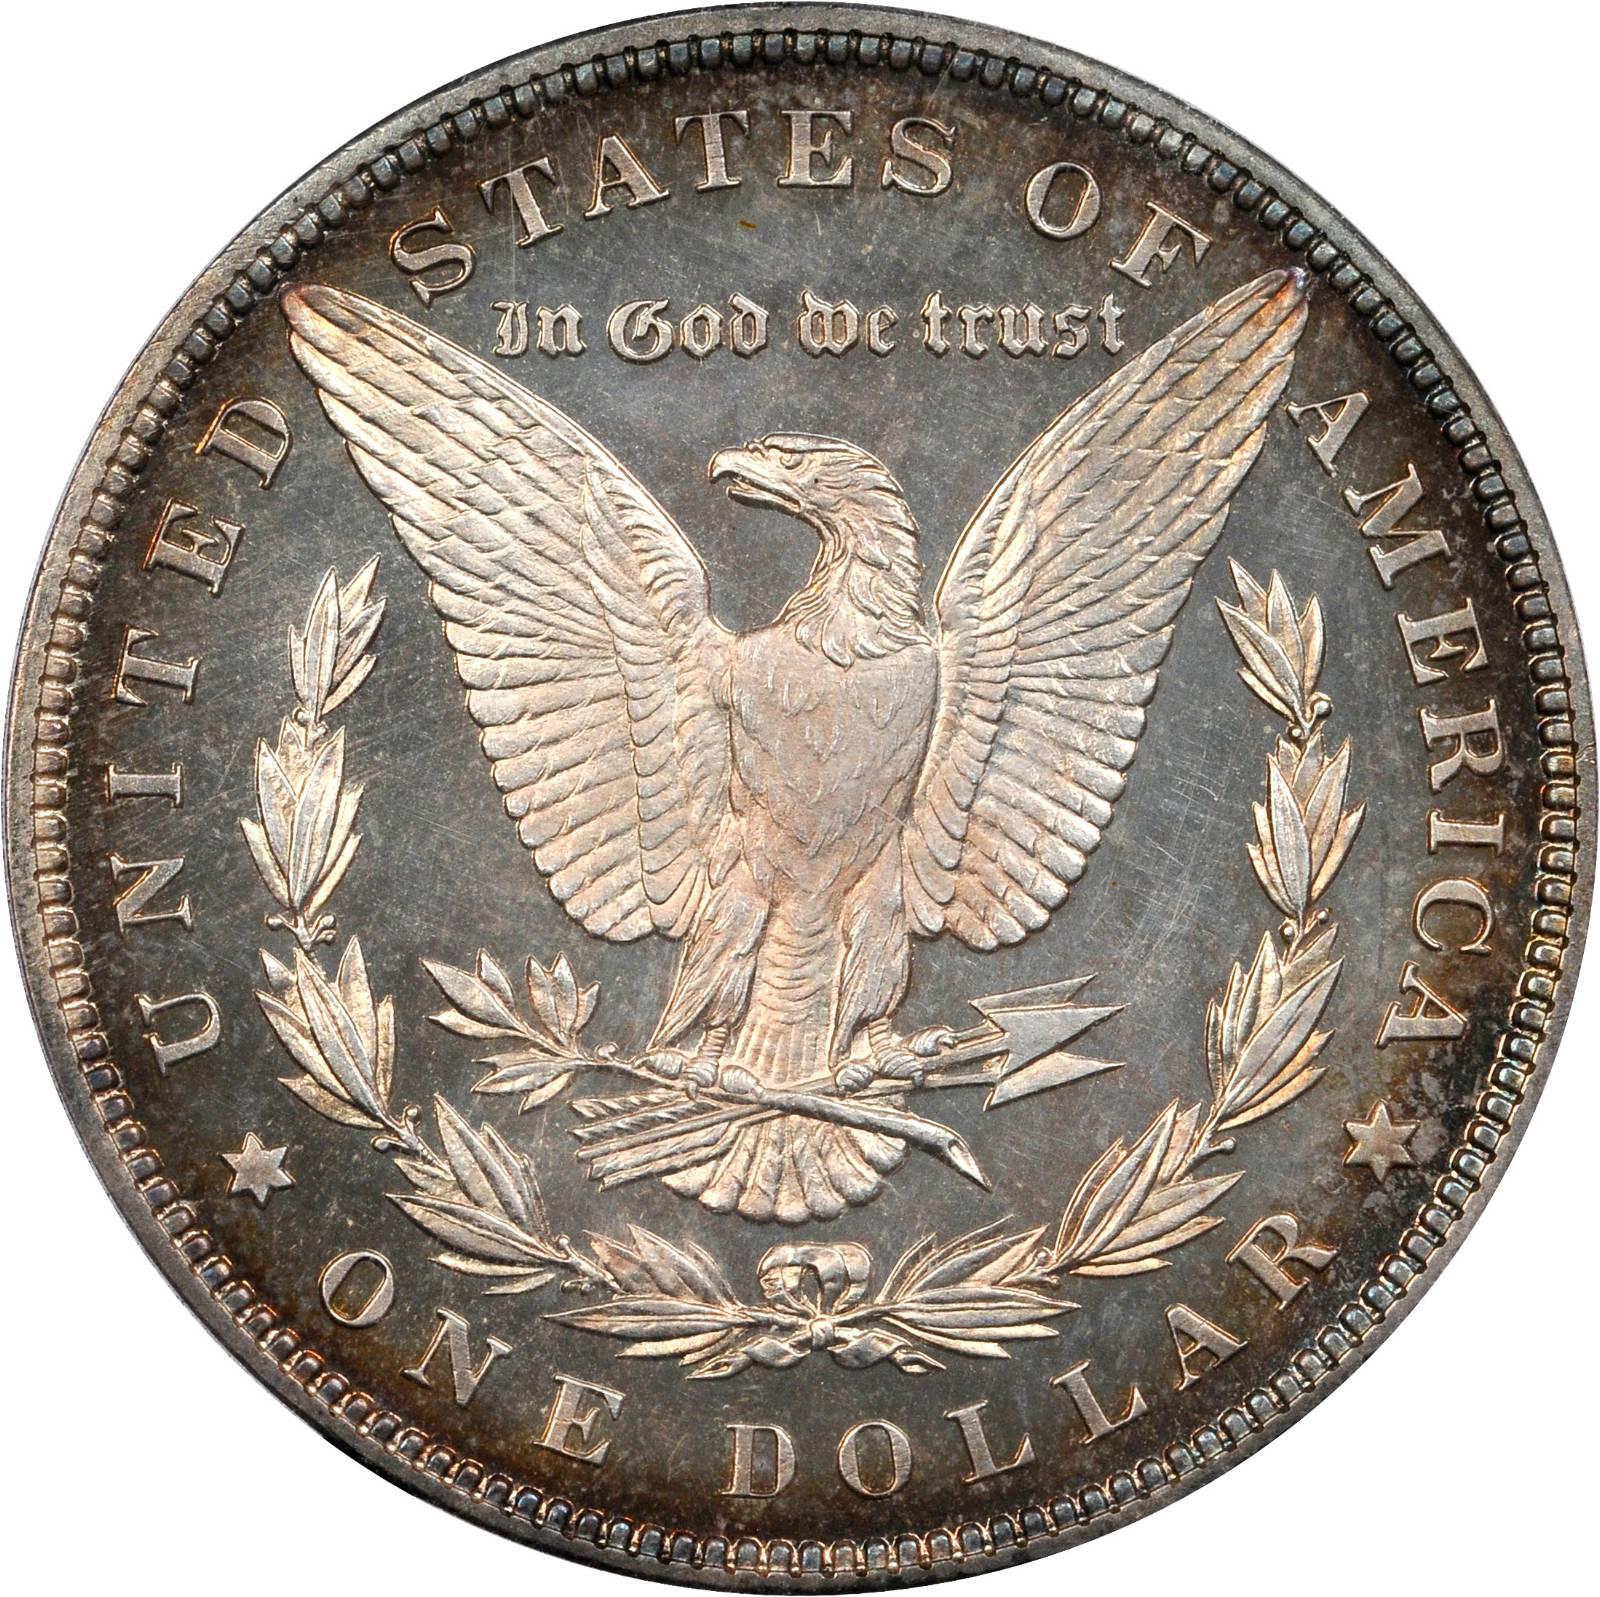 Morgan dollar - Wikipedia